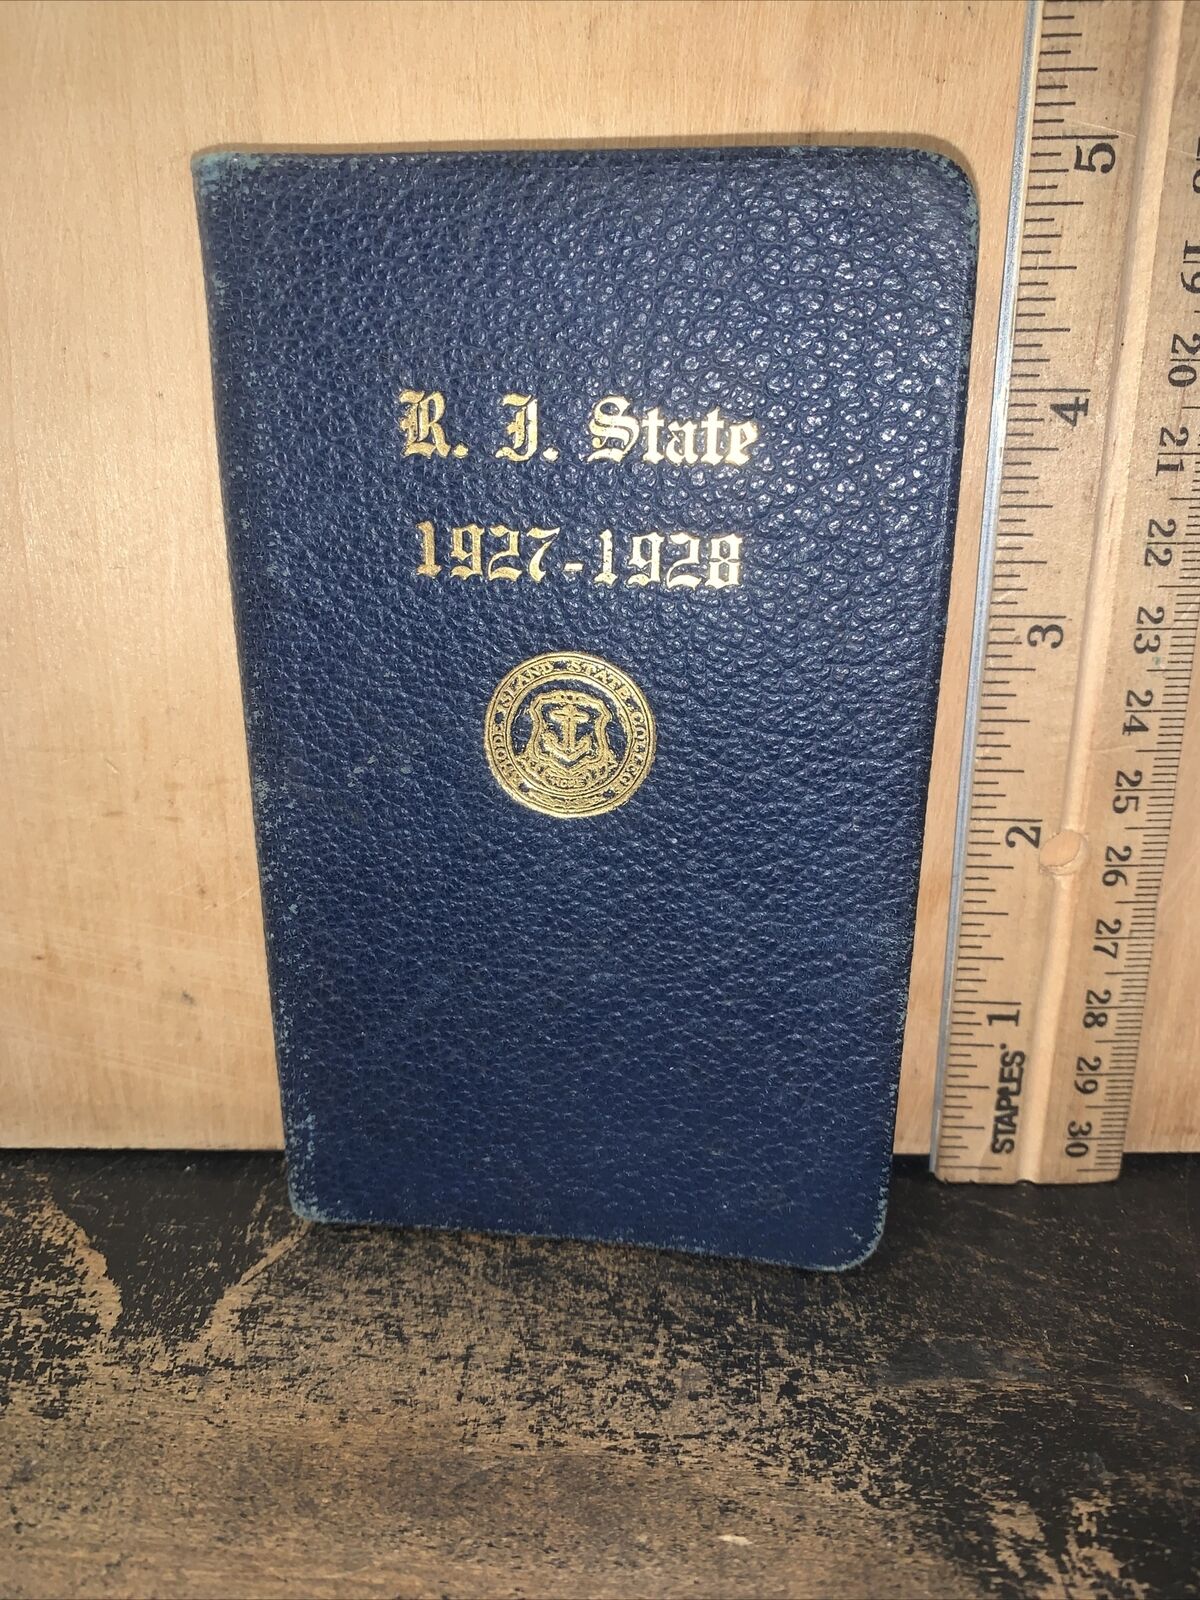 VINTAGE RHODE ISLAND STATE COLLEGE FRESHMAN BIBLE 1927-1928